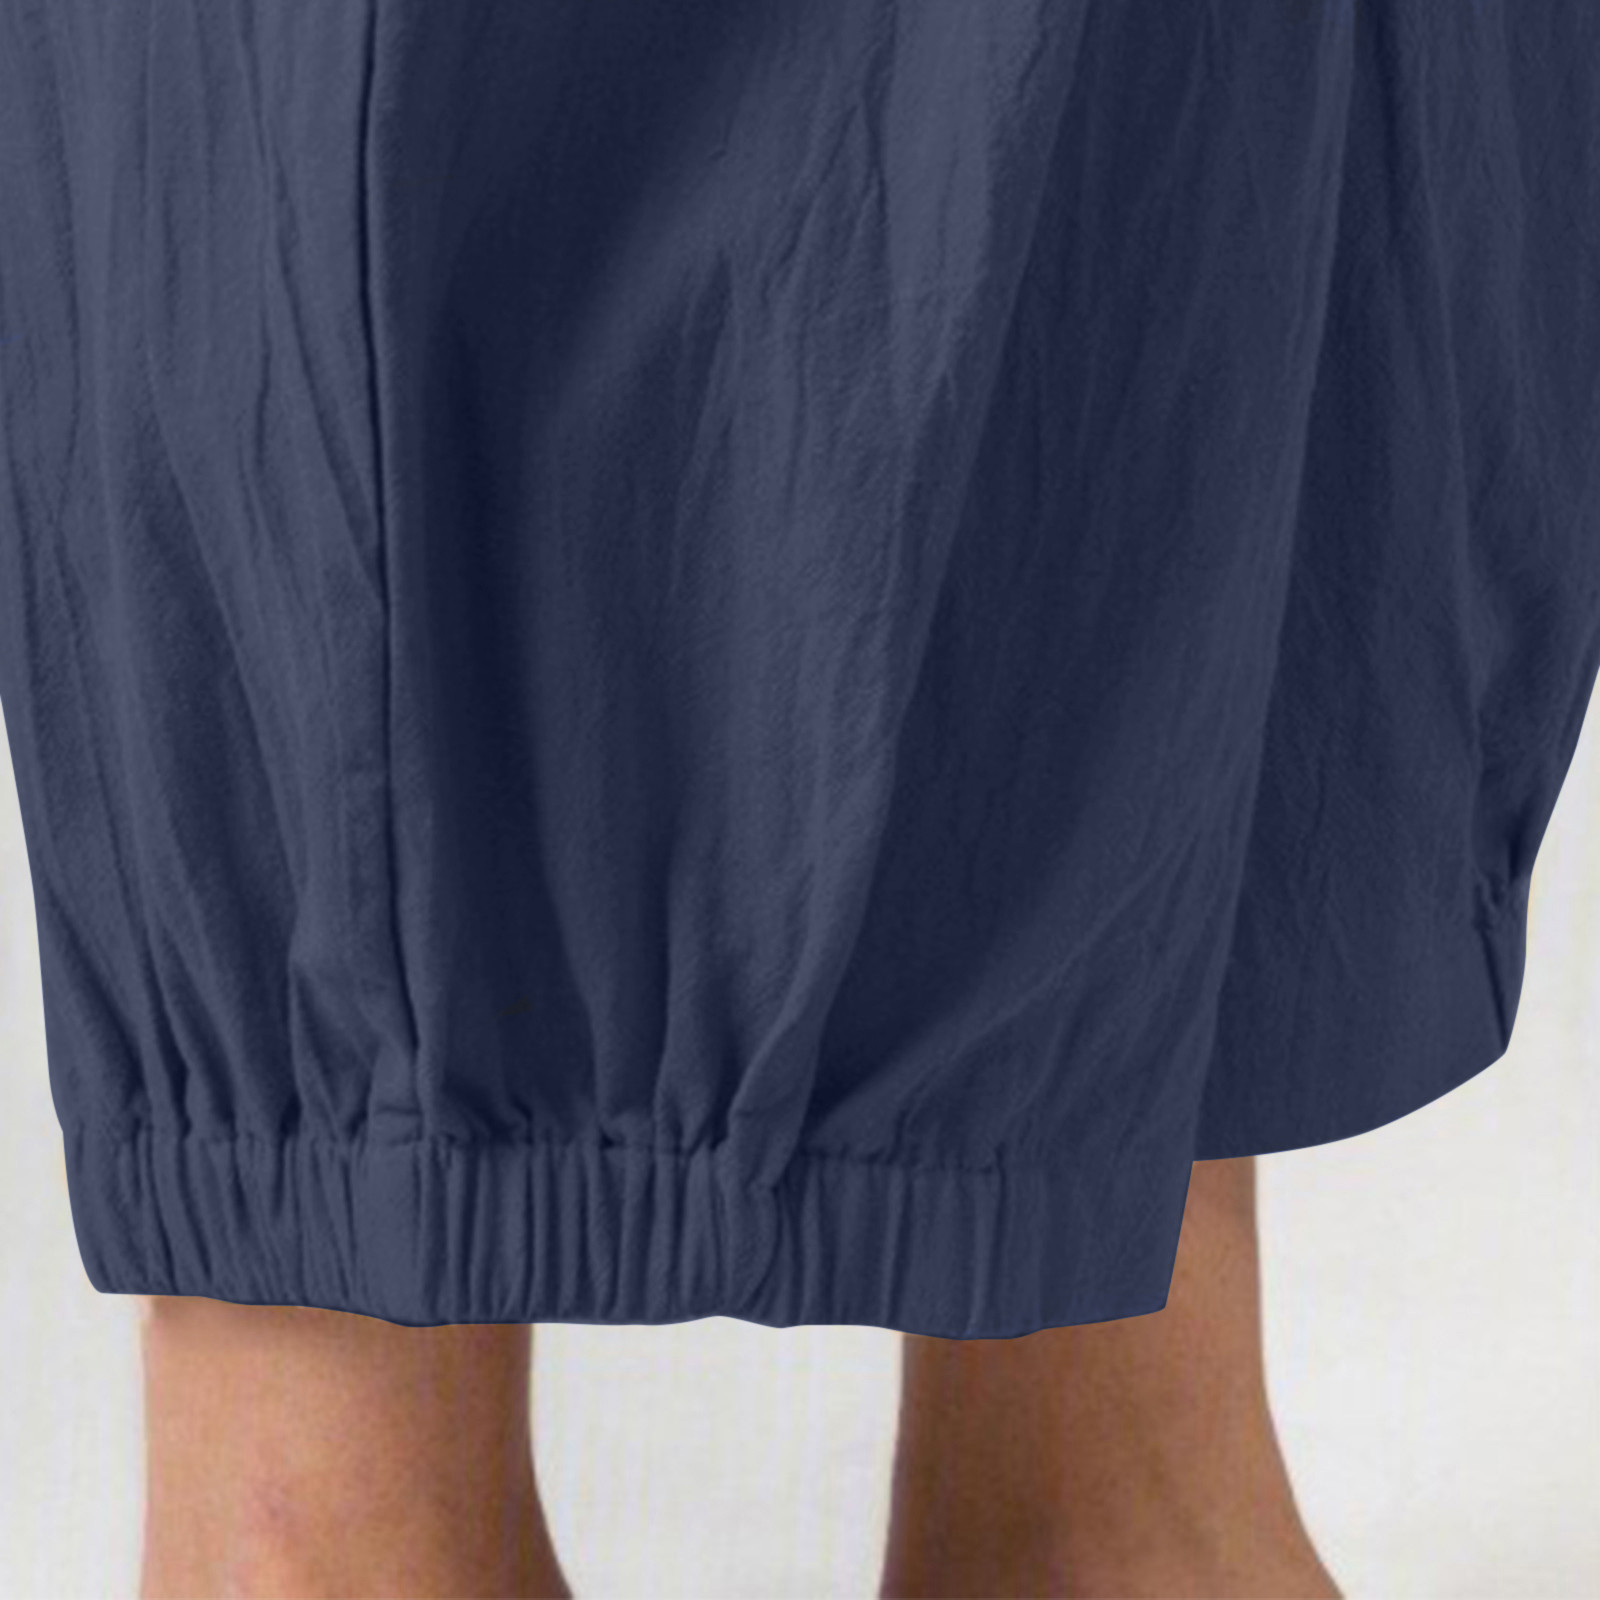 Clearance LYXSSBYX Womens Capri Pants with Pockets Plus Size Women ...